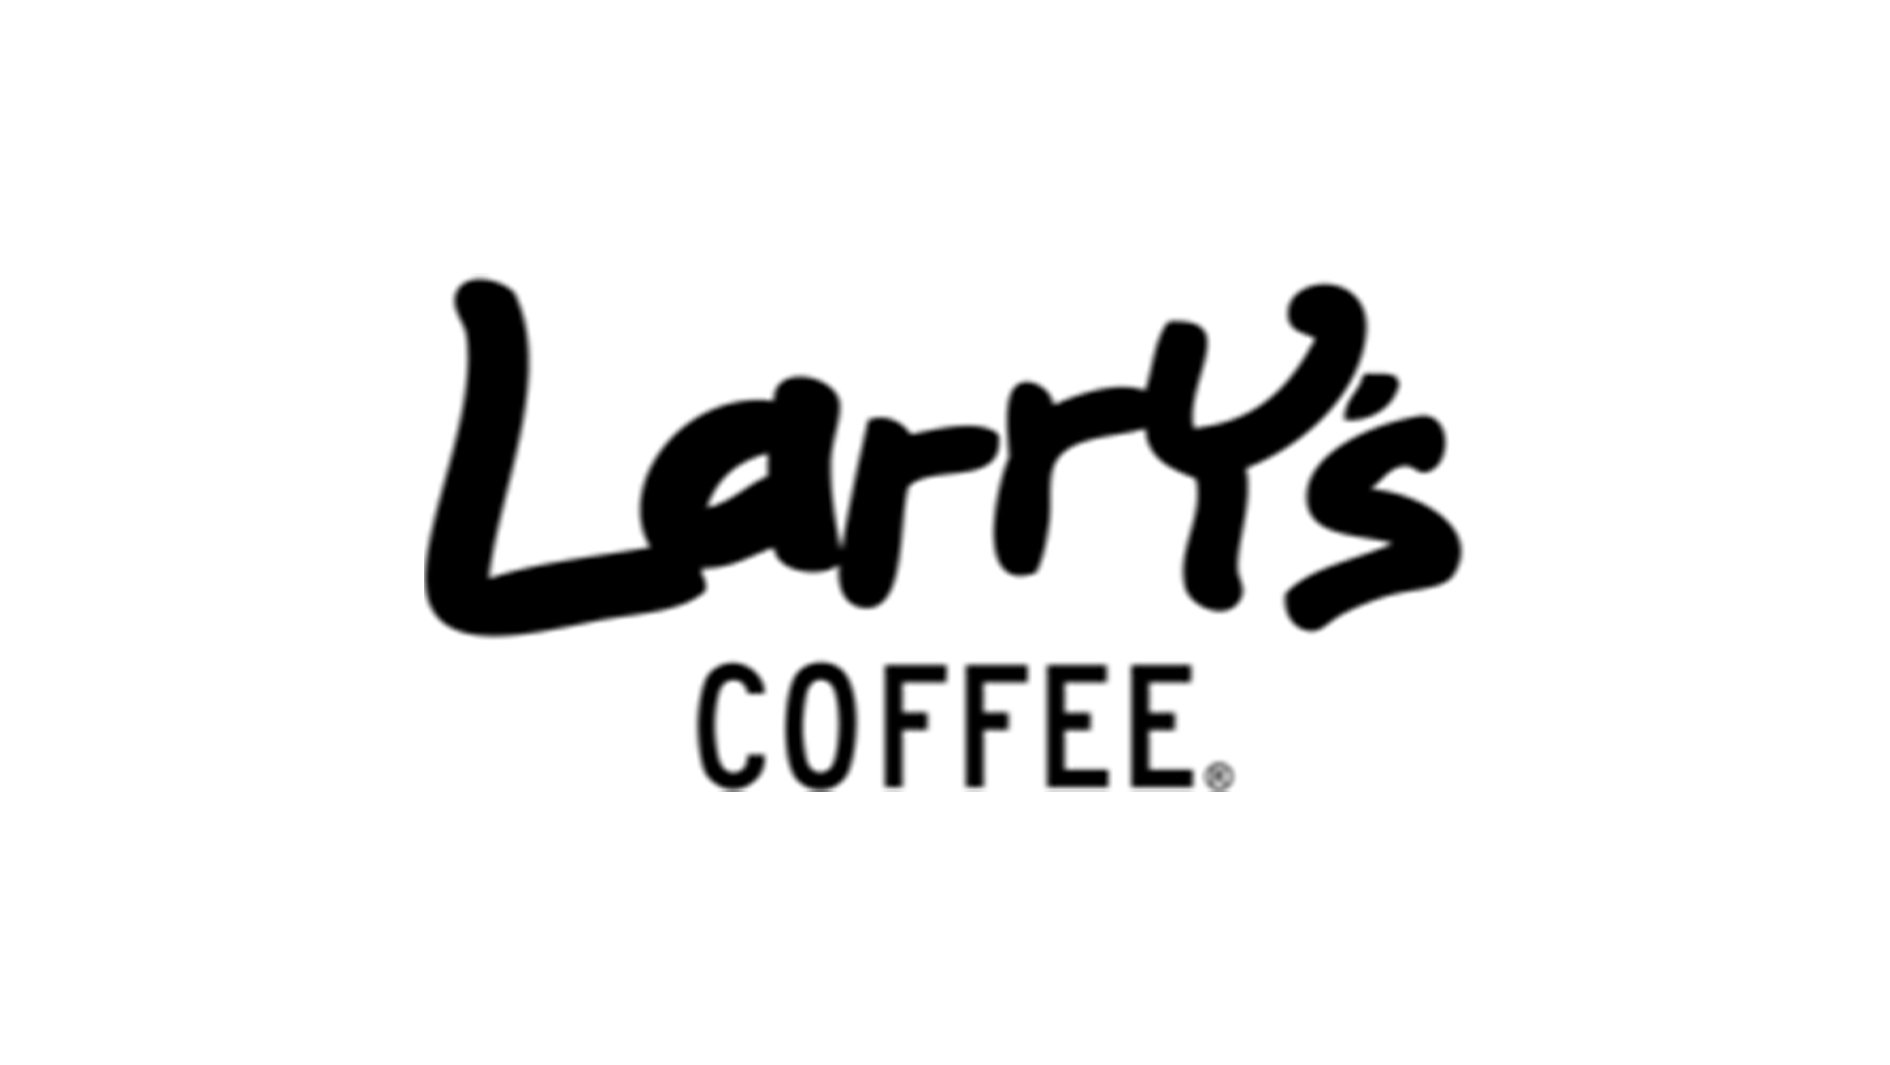 Industries-Logos-LarrysCoffee.jpg